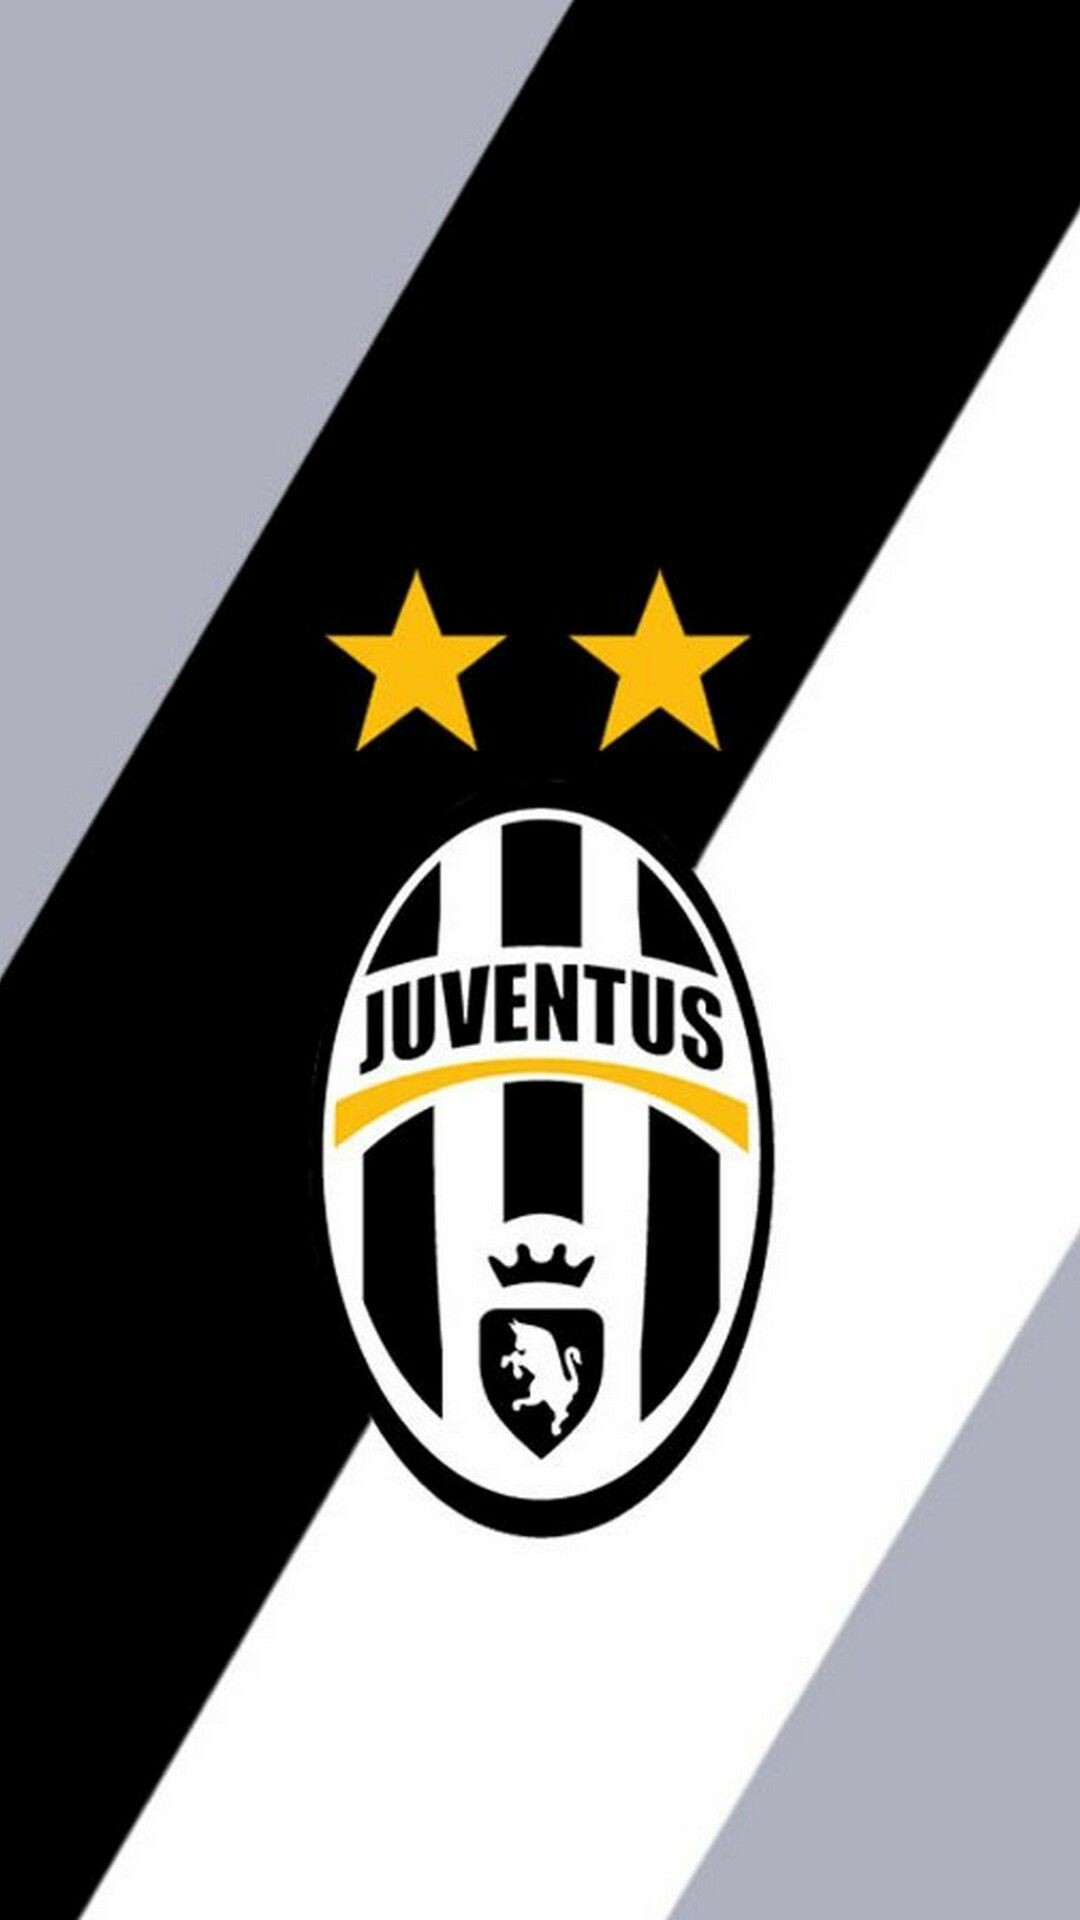 Forza Juve, Juventus Android wallpaper, iPhone wallpaper, Best wallpapers, 1080x1920 Full HD Phone